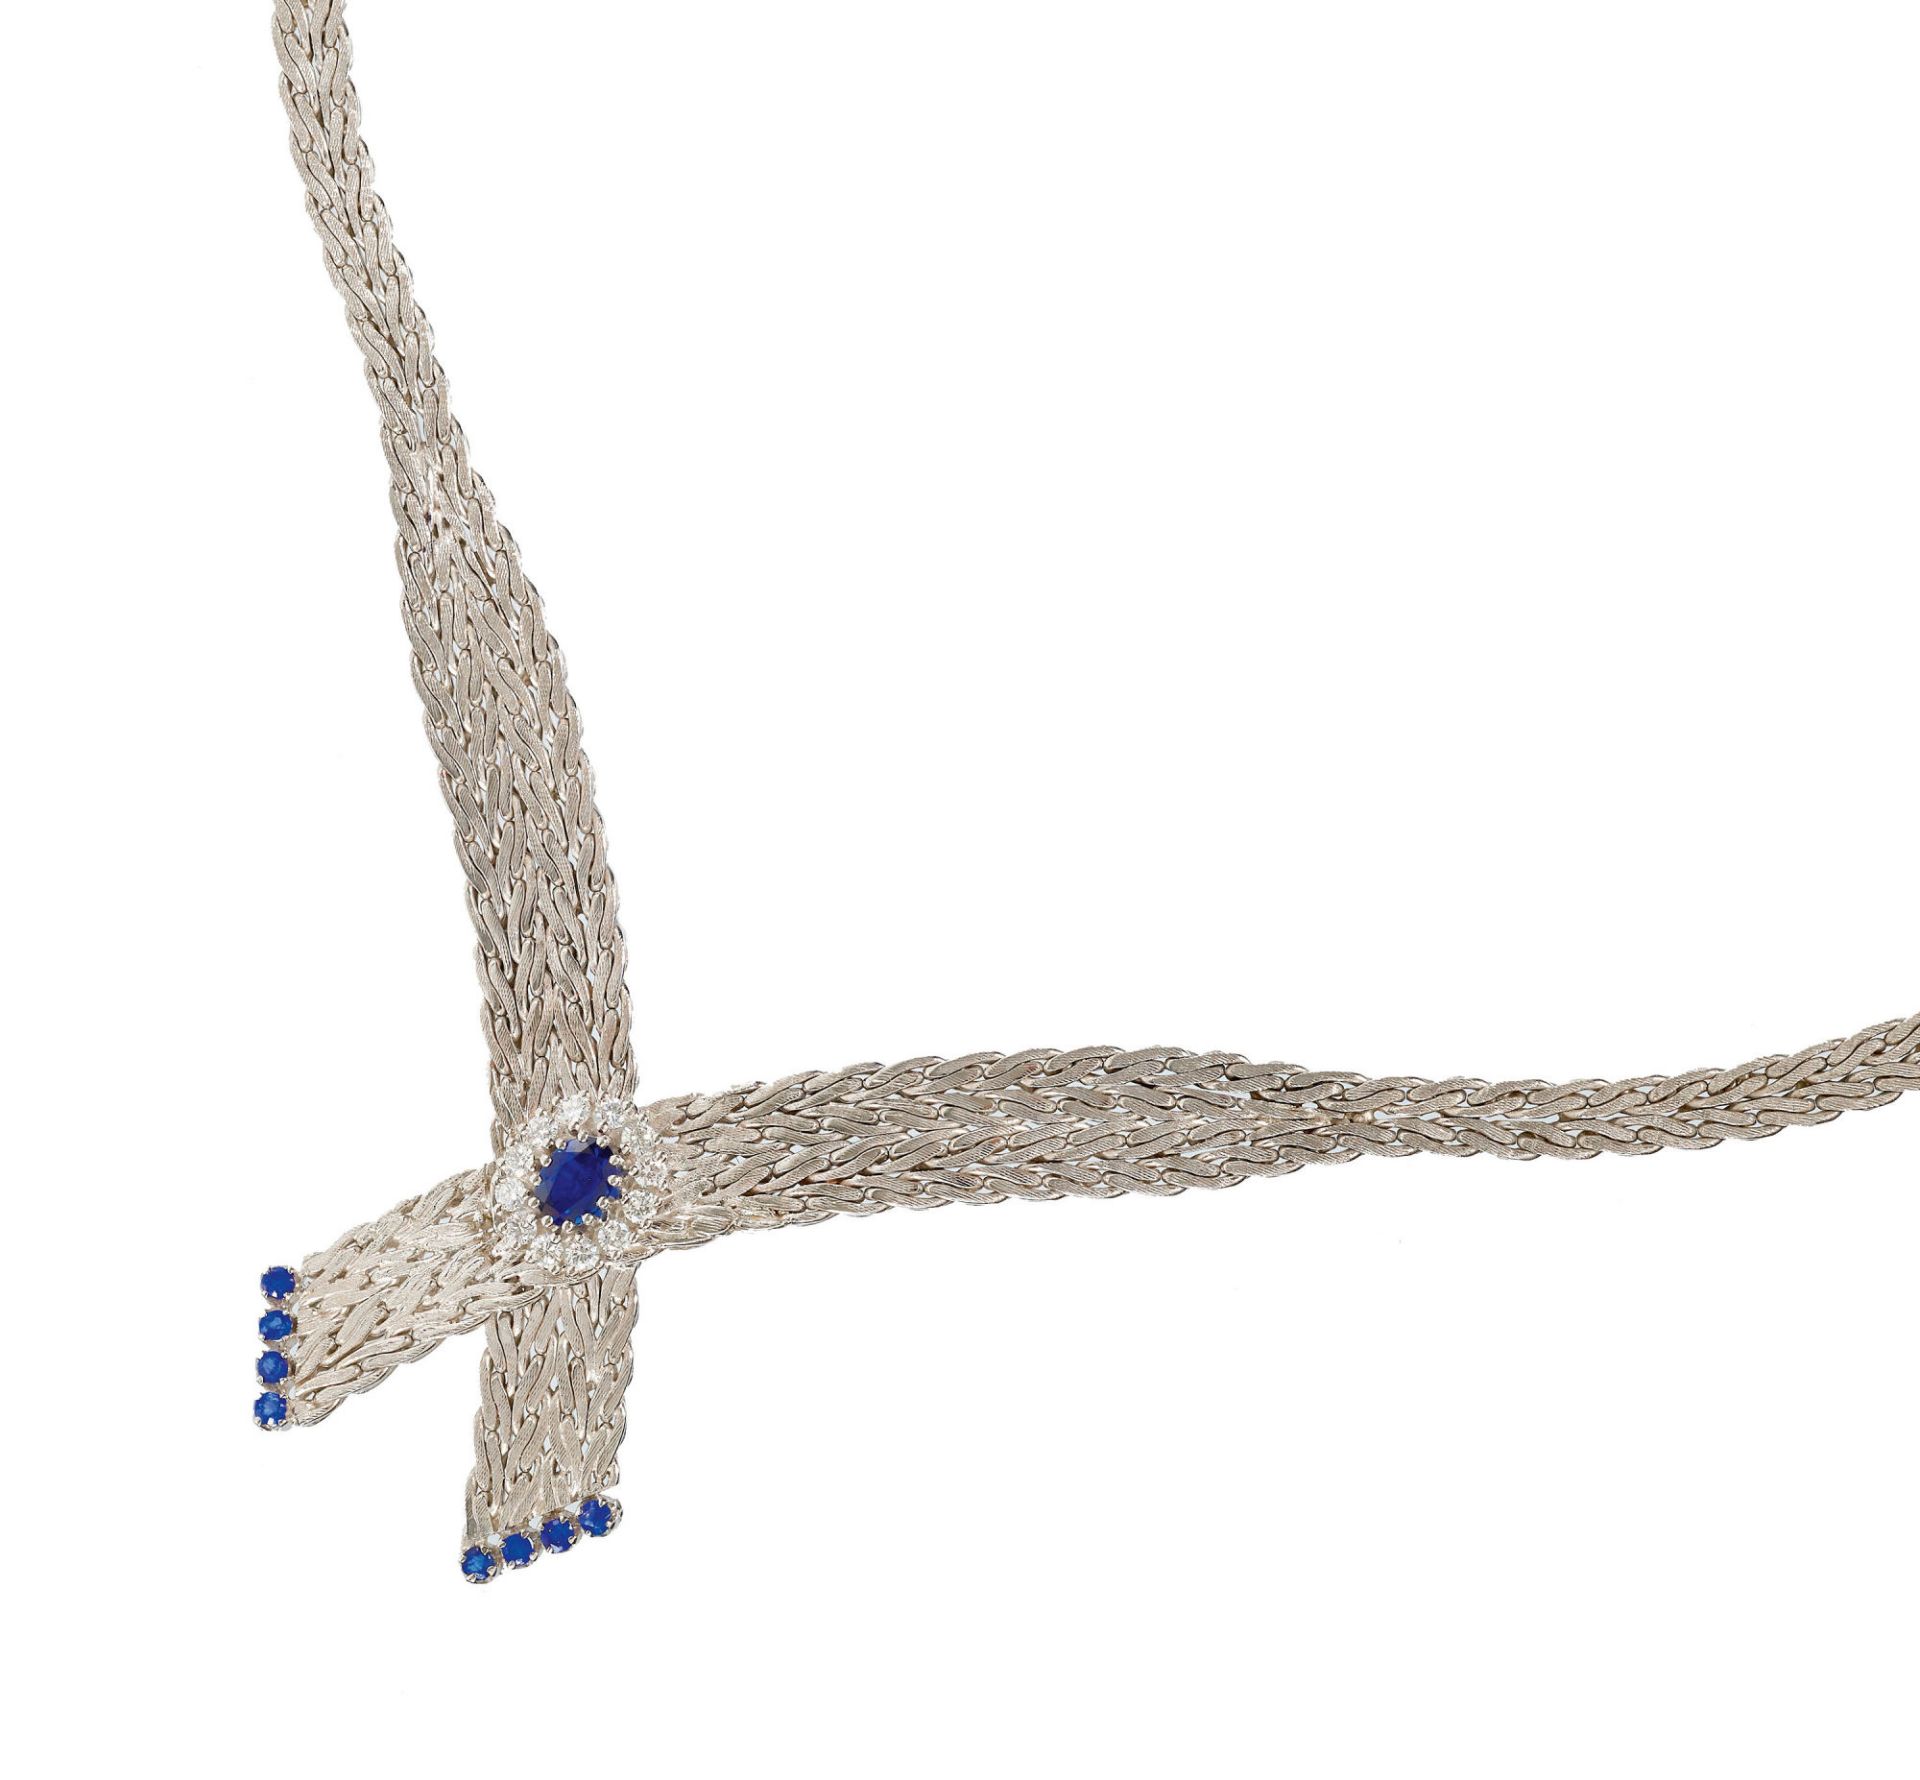 SAPHIR-BRILLANT-COLLIER / Sapphire-diamond-necklace 